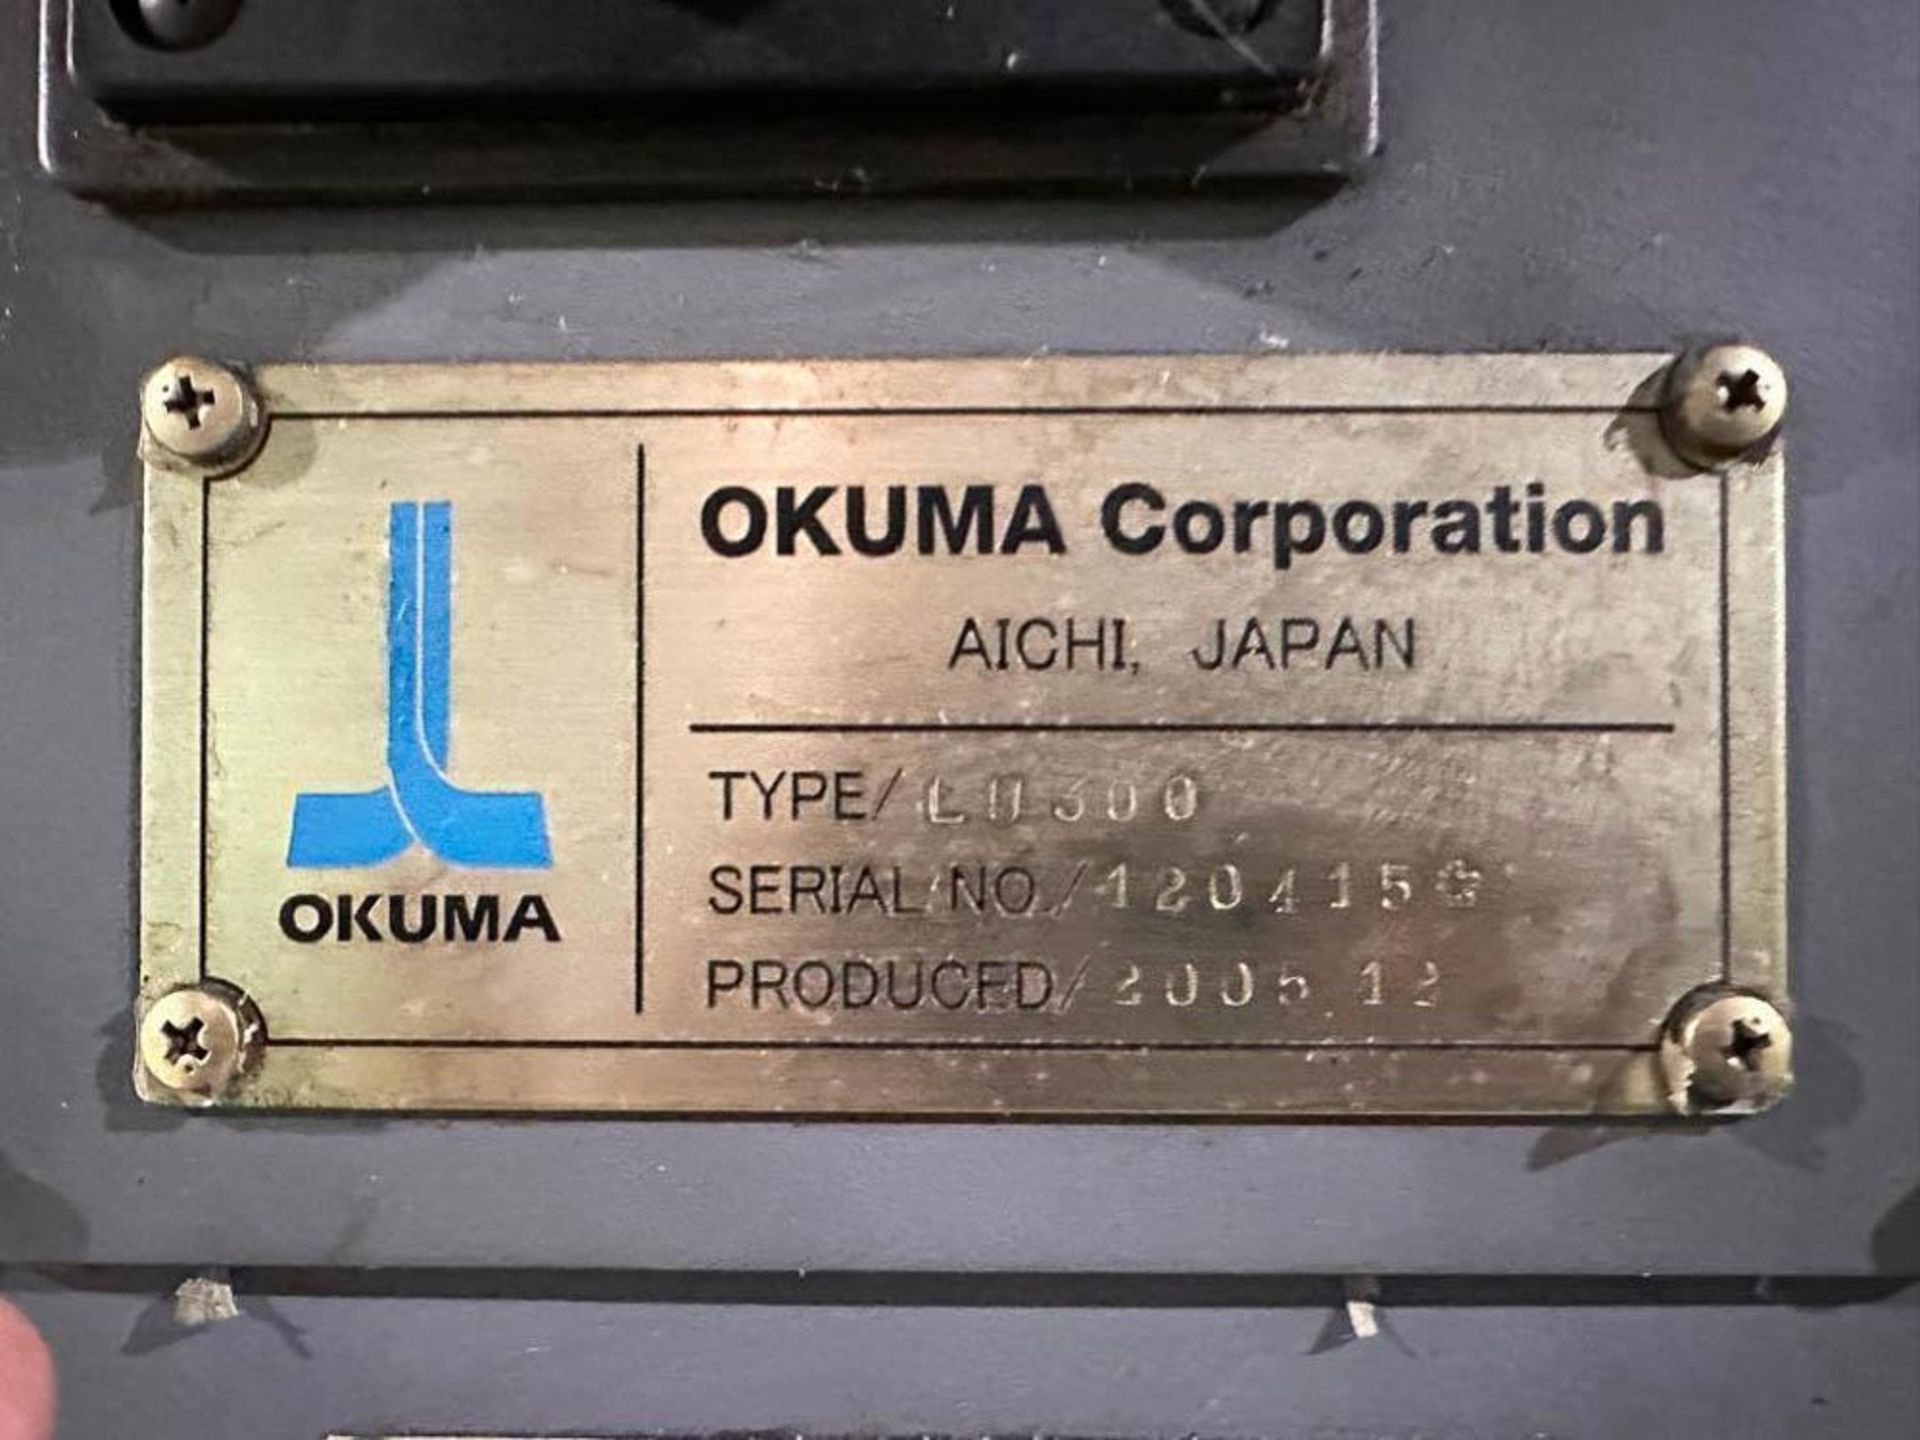 2013 Okuma Simulturn CNC Lathe, Model: LU300, S/N: 120415 with OSP-P100 HMI and Fork Clamp - Image 3 of 10